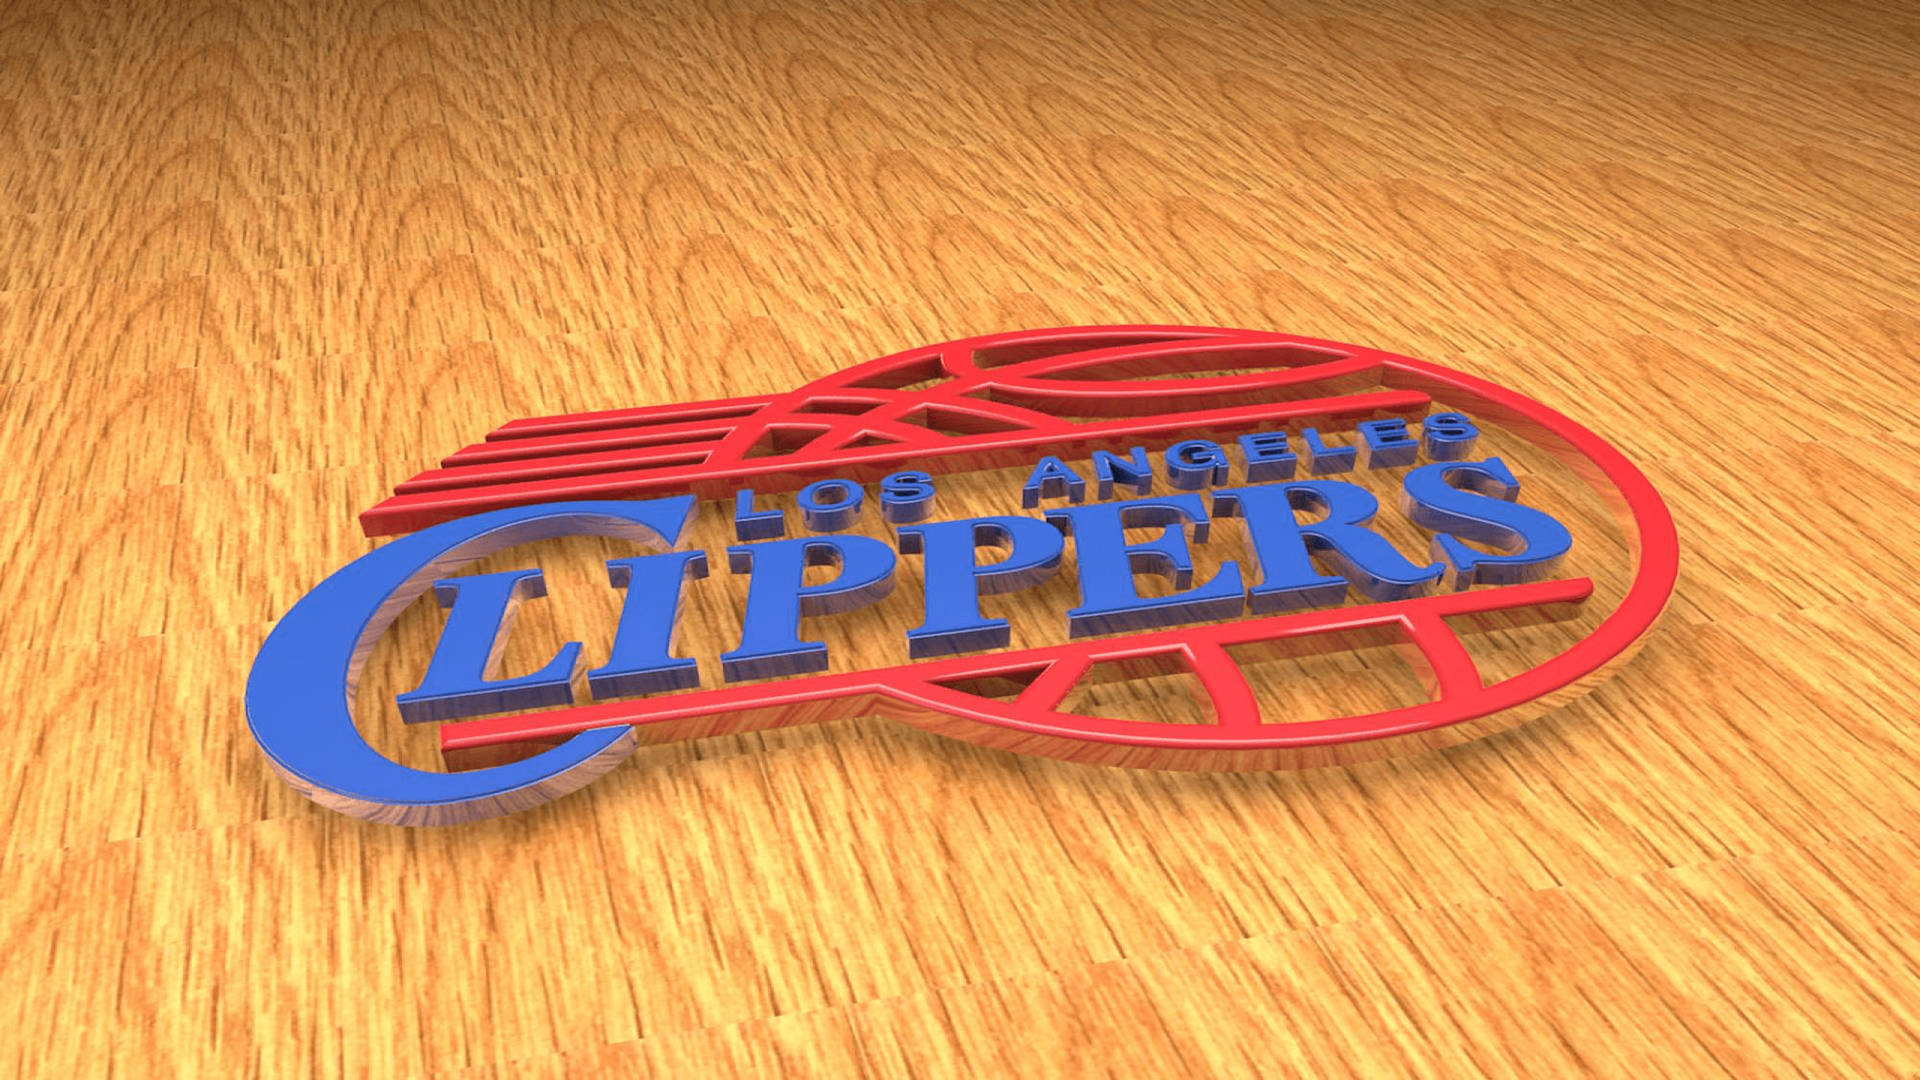 Los Angeles Clippers 3D 1984 Logo Wallpaper